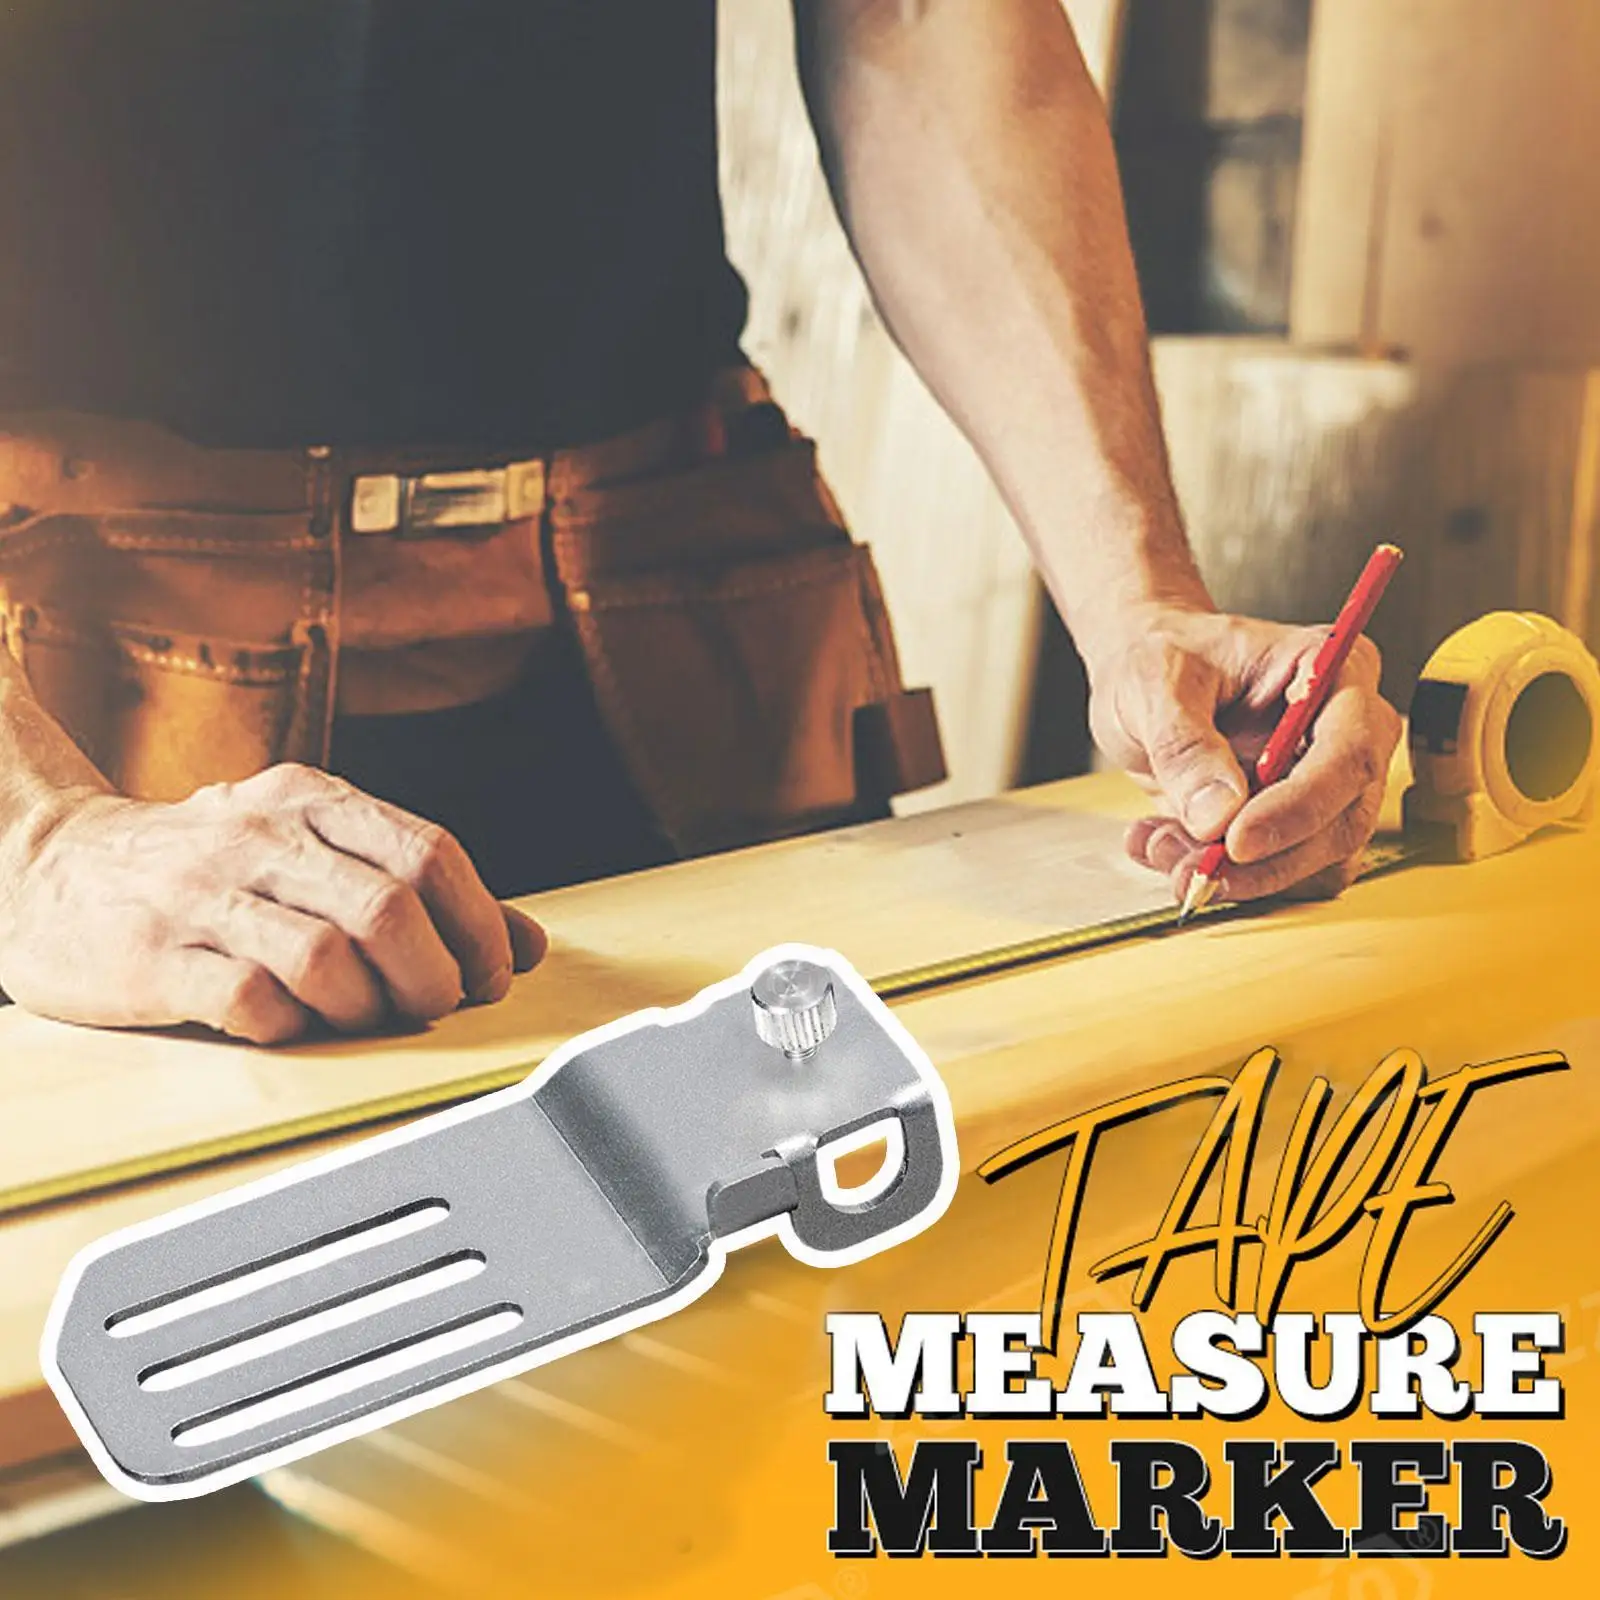 

Tape Measure Locator Measuring Tape Clip Measure Precision Tool For Edge Fringe Positioning Corner Clamp Flexible Ruler Mar P3v2